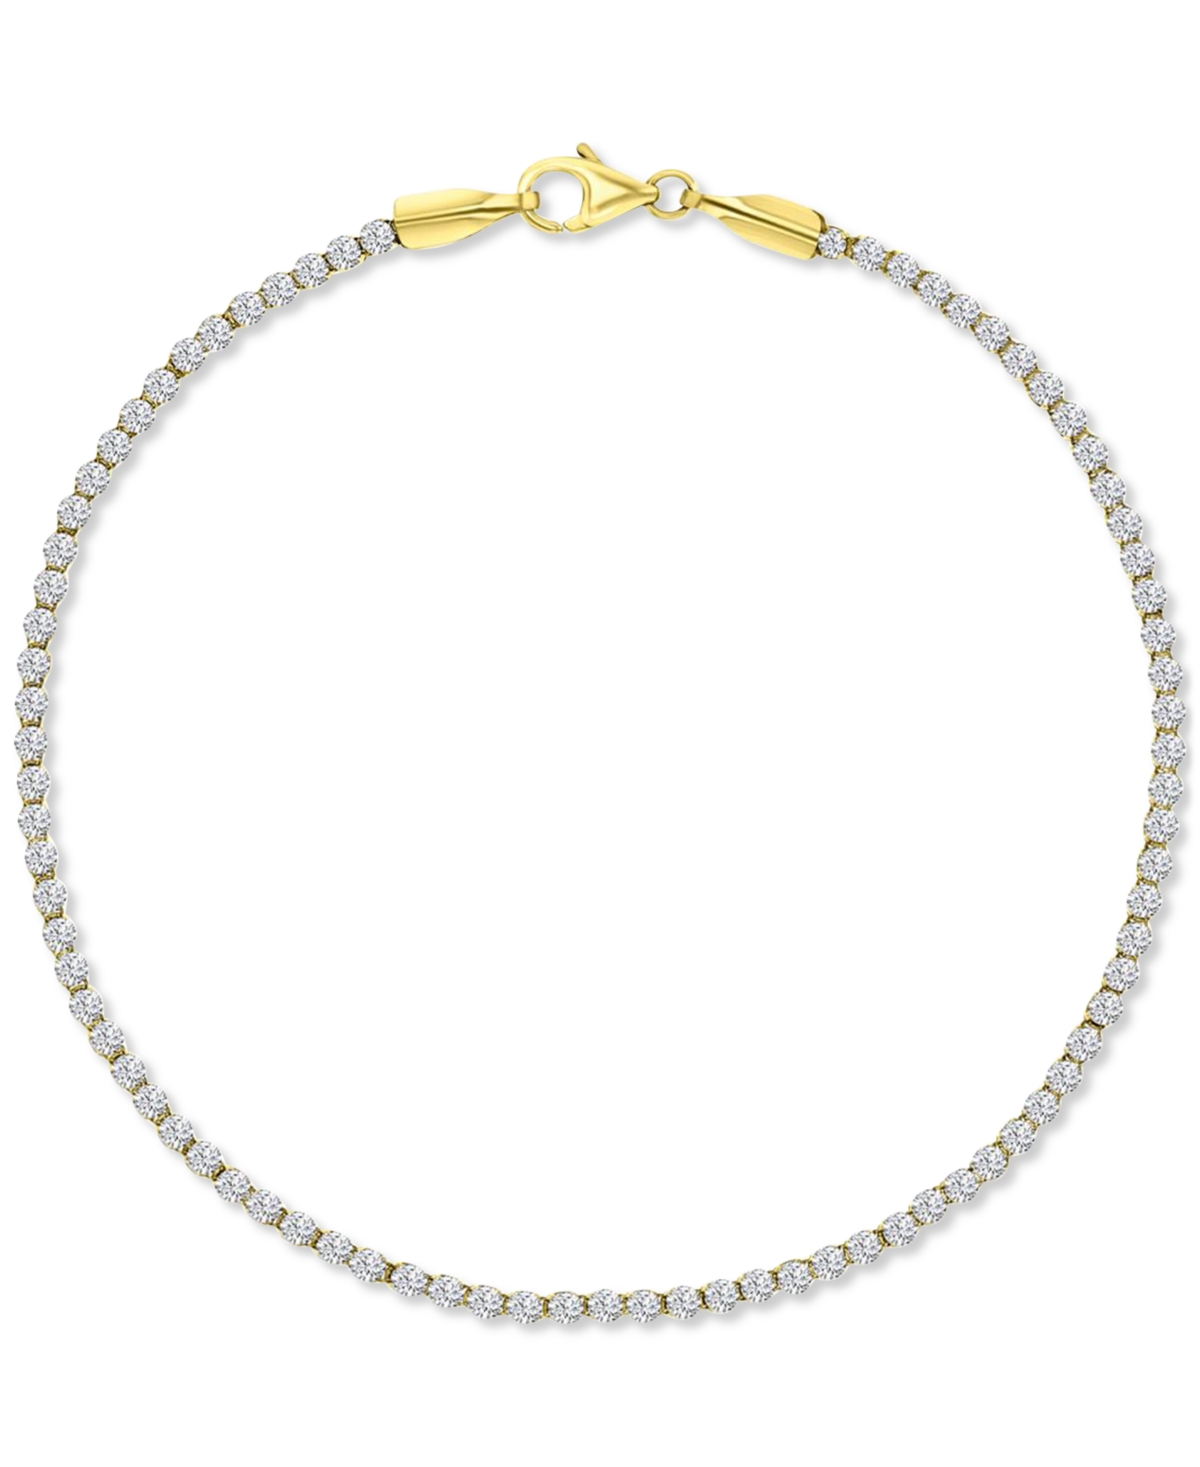 Cubic Zirconia All-Around Tennis Bracelet in 10k Gold - Gold